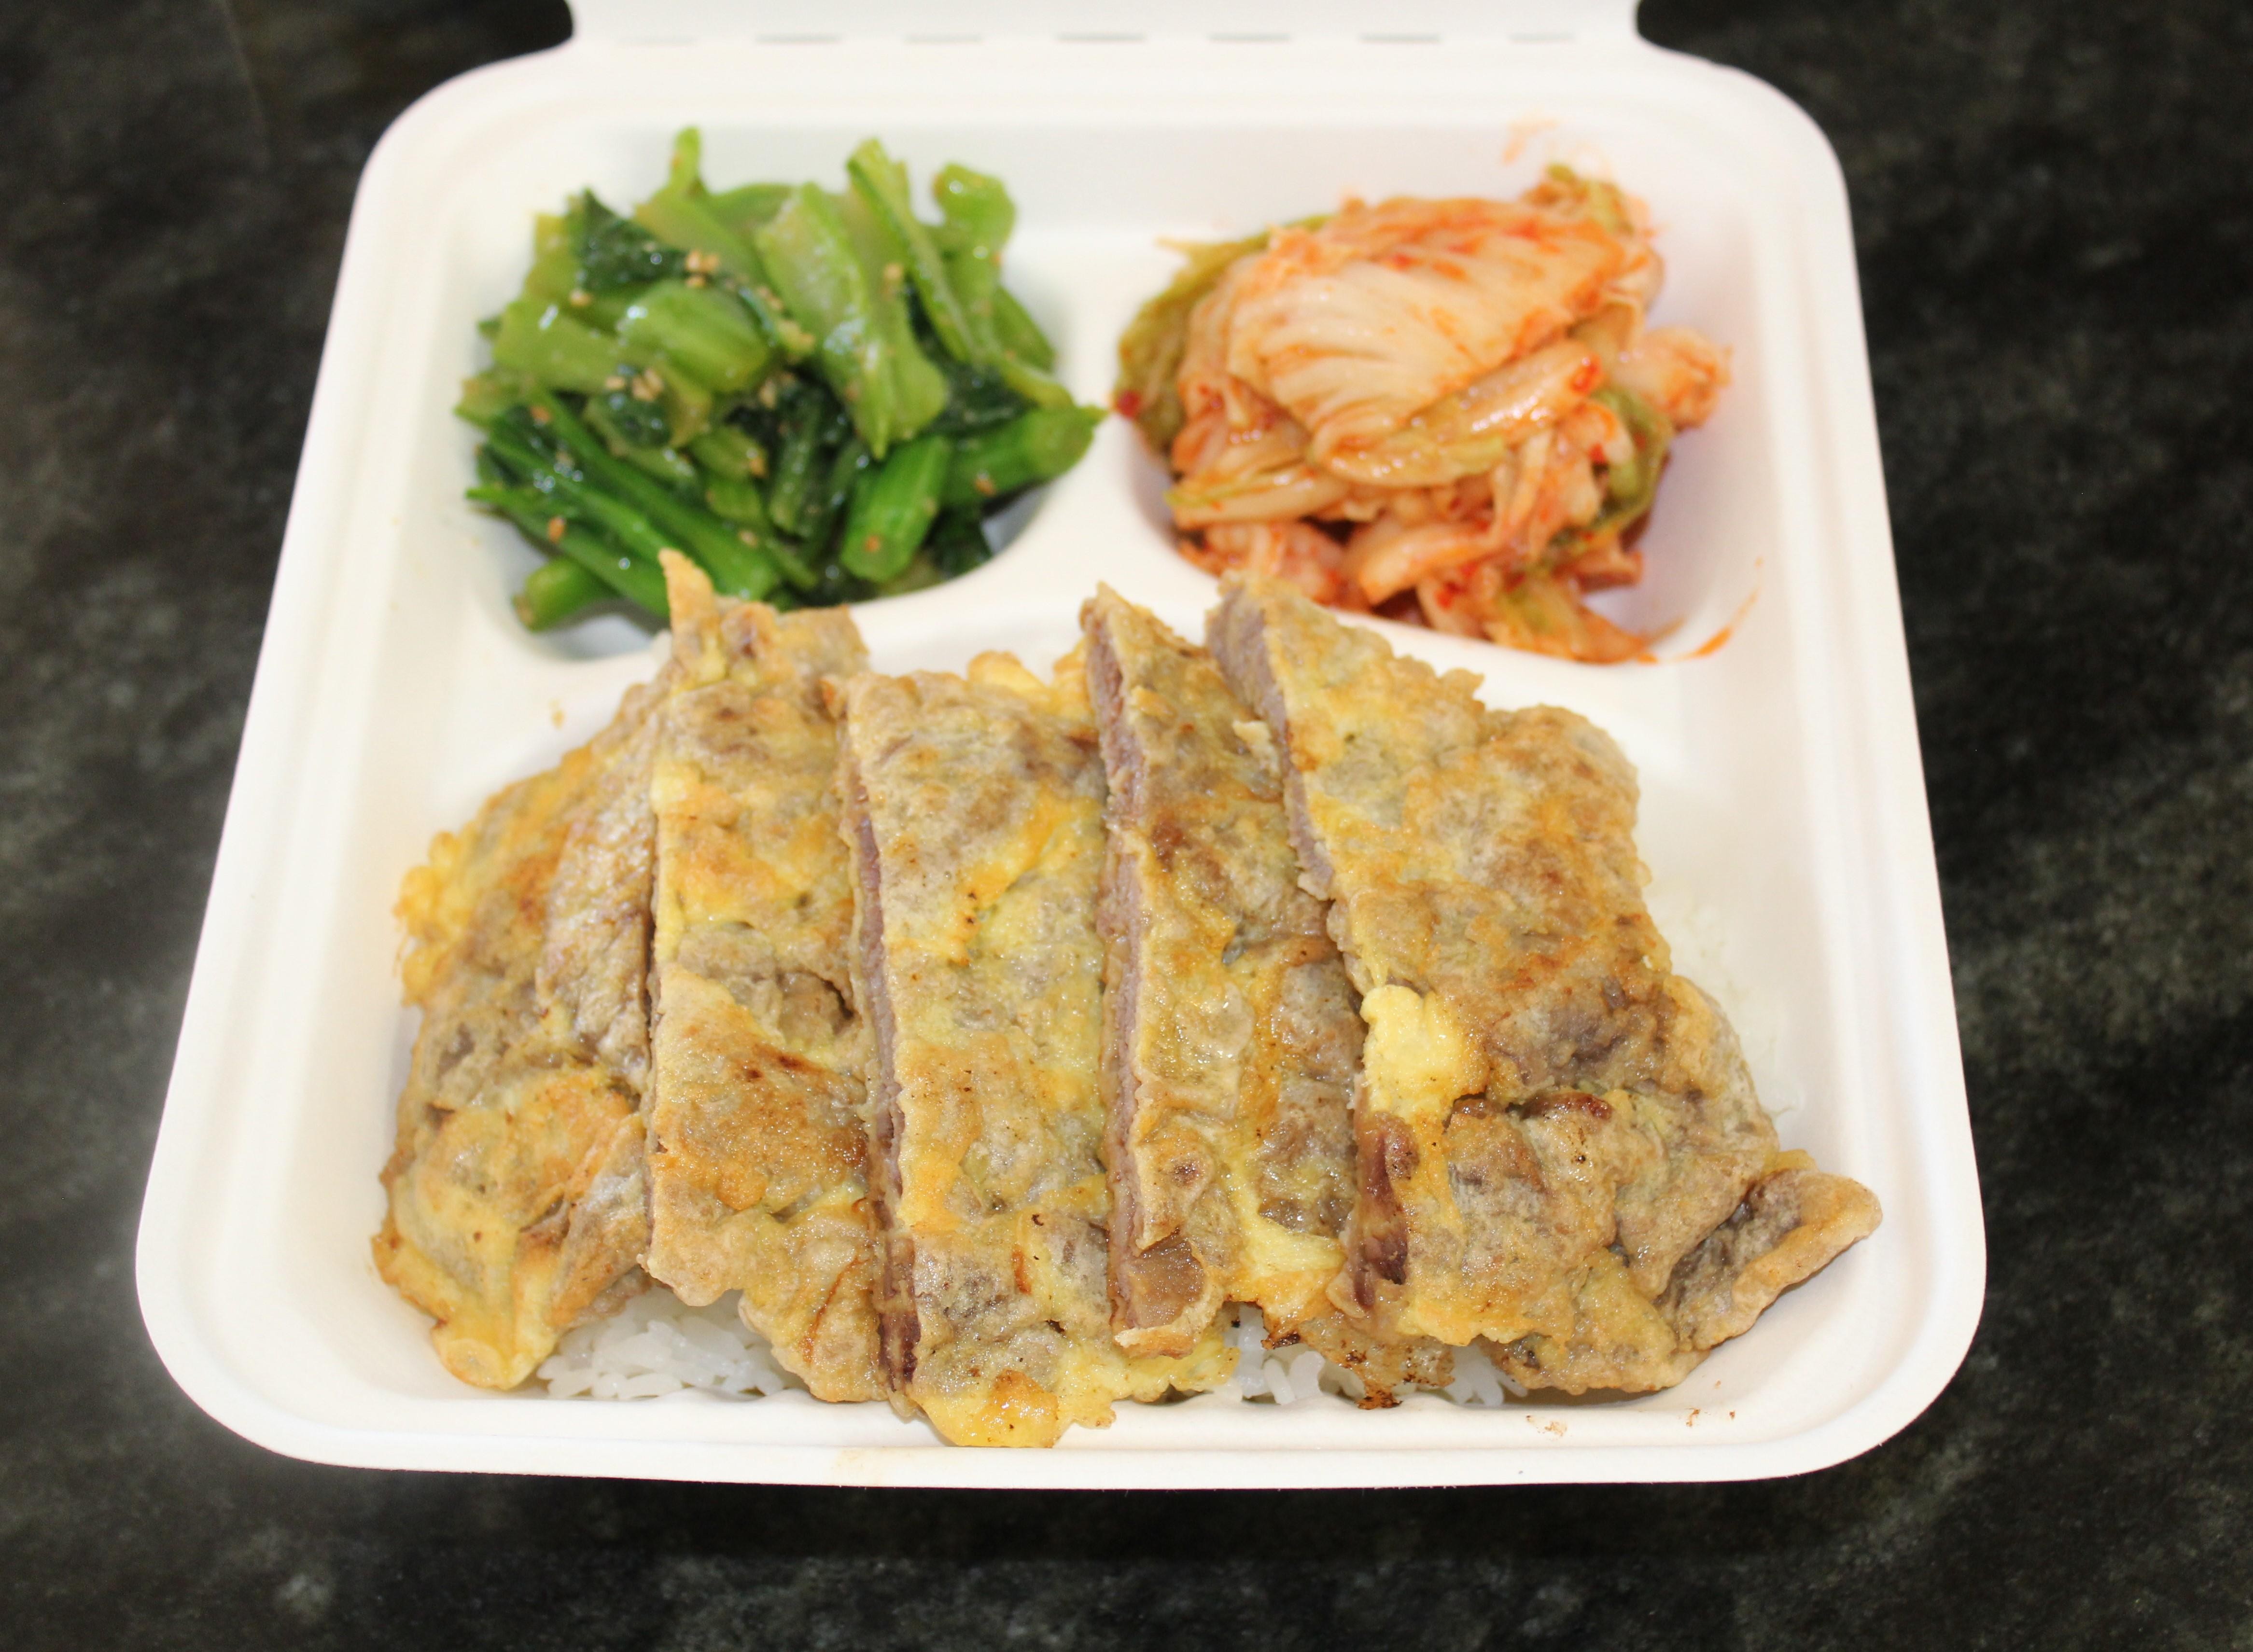 Meat Jun Plate- Lunch